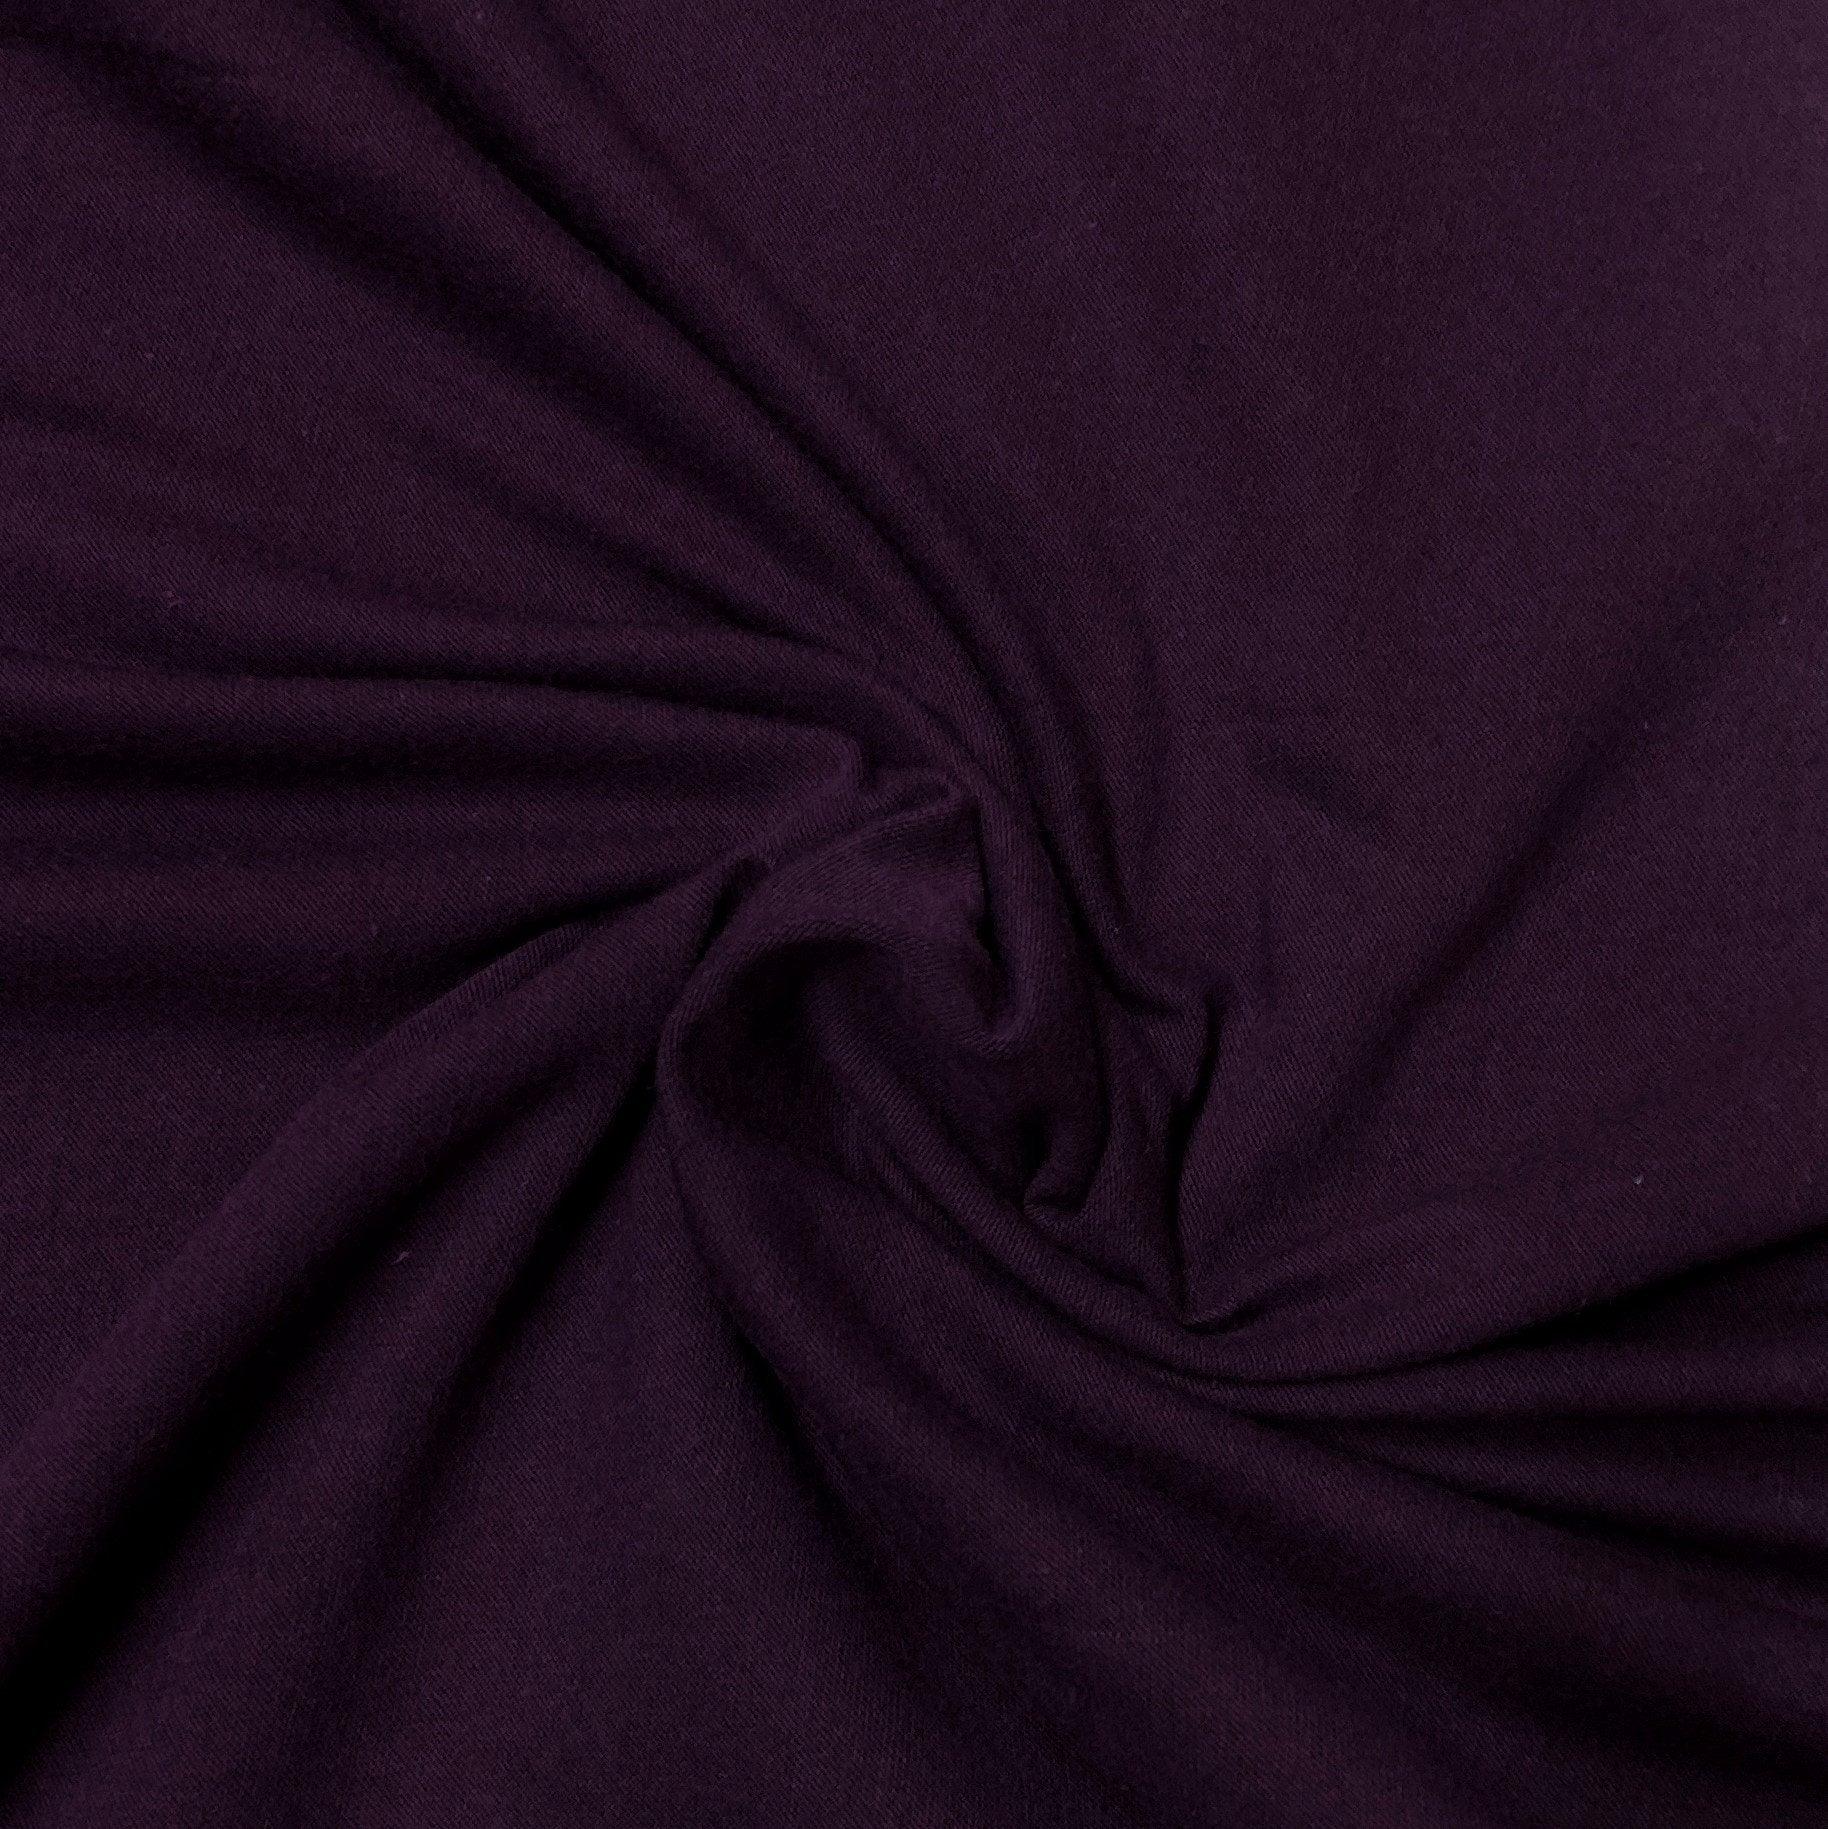 Purple Cotton Lycra